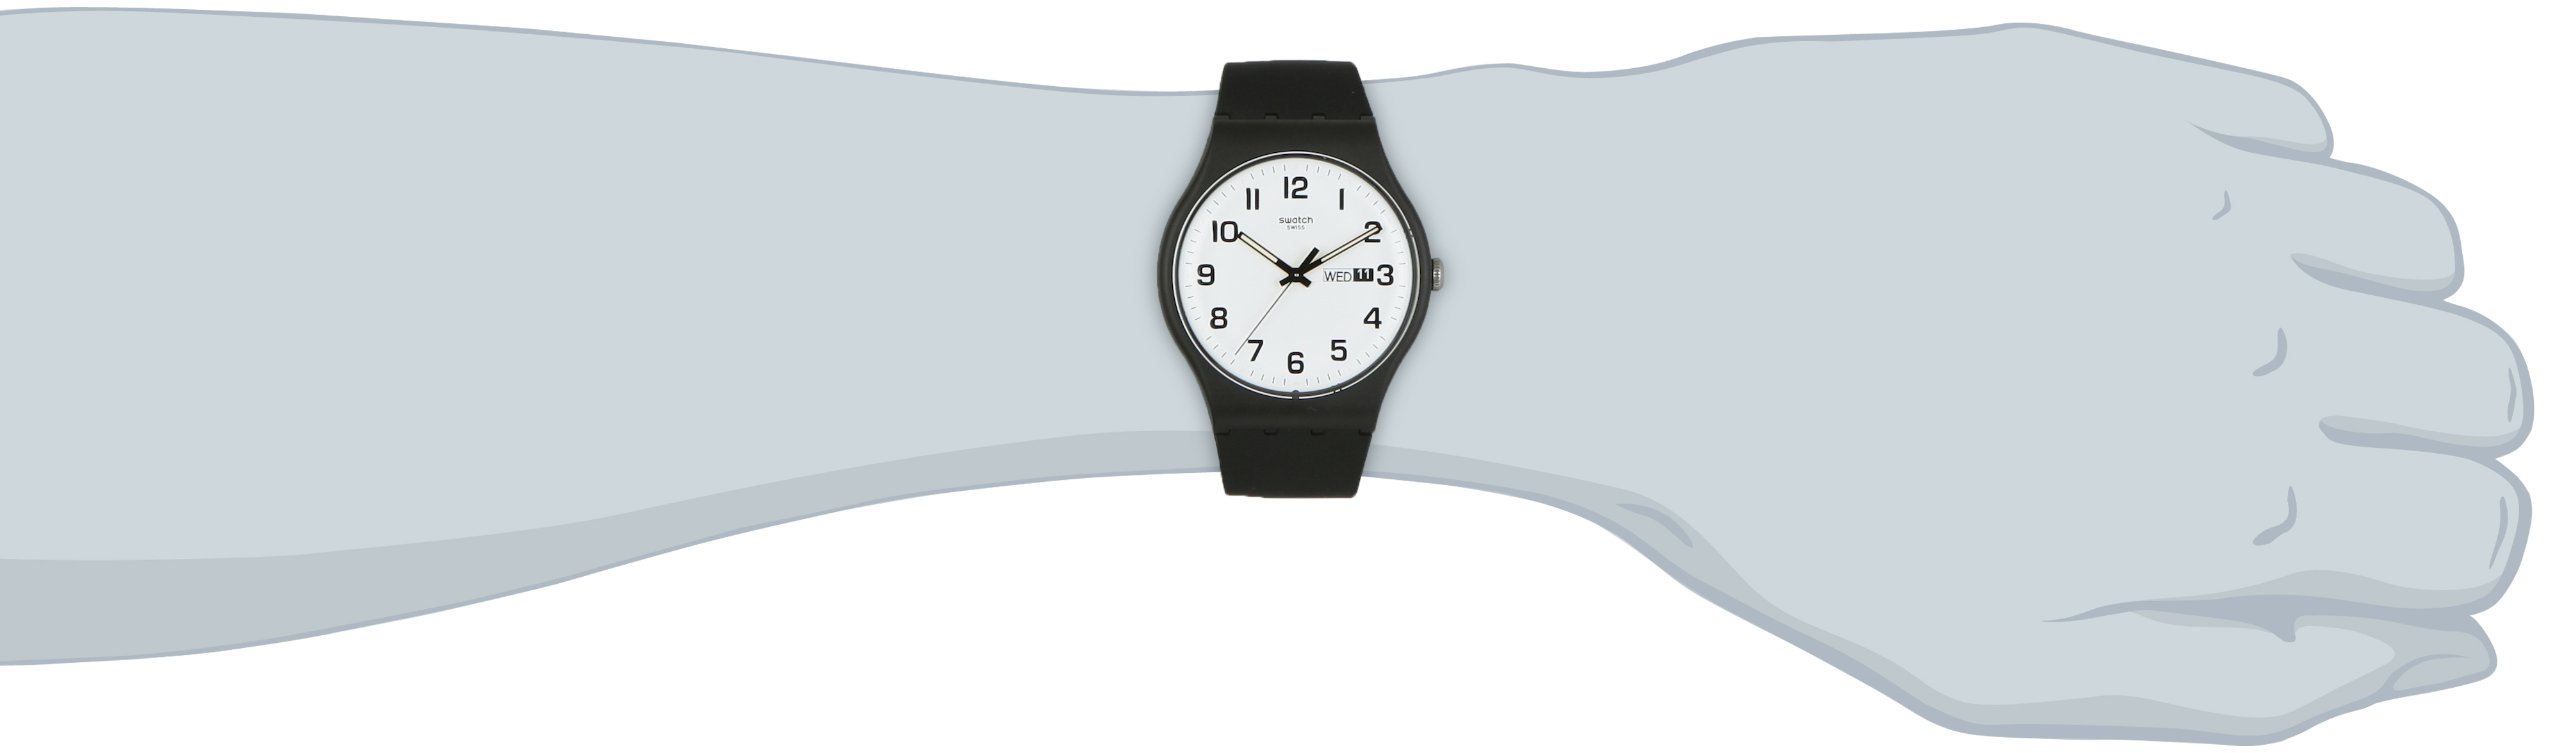 Swatch Classic Quartz Silicone Strap, Black, 20 Casual Watch (Model: SUOB705)